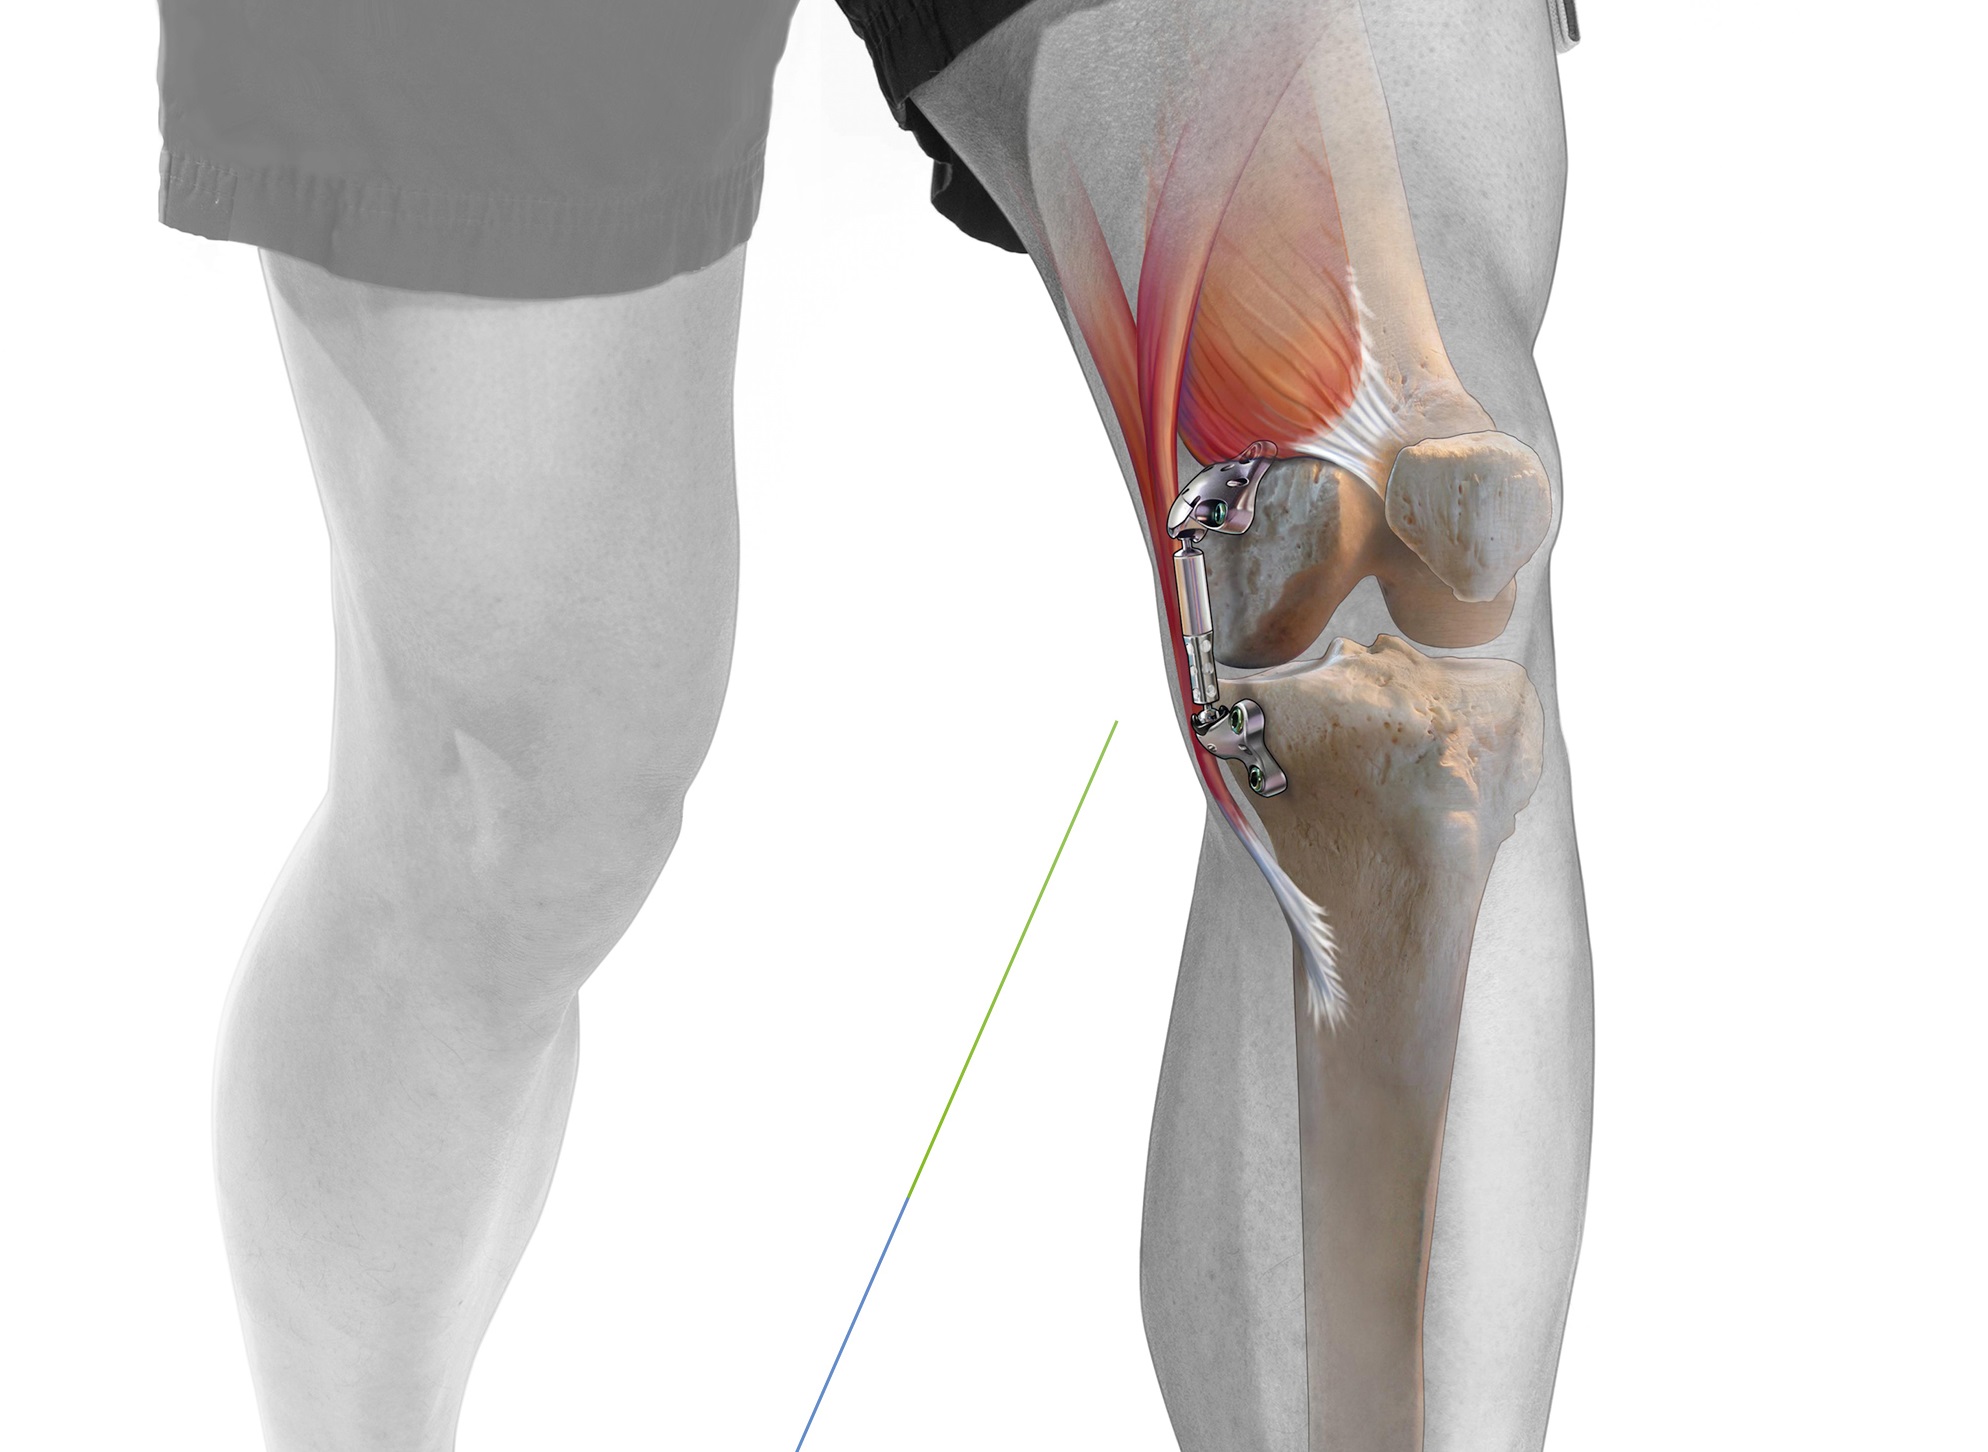 Операция по замене коленного сустава москва. Эндопротез коленного сустава. Деформирующий остеоартроз коленного сустава эндопротез. Титановый эндопротез коленный. Эндопротезирование ортопедической коленного сустава PFC Sigma CR allpoly.